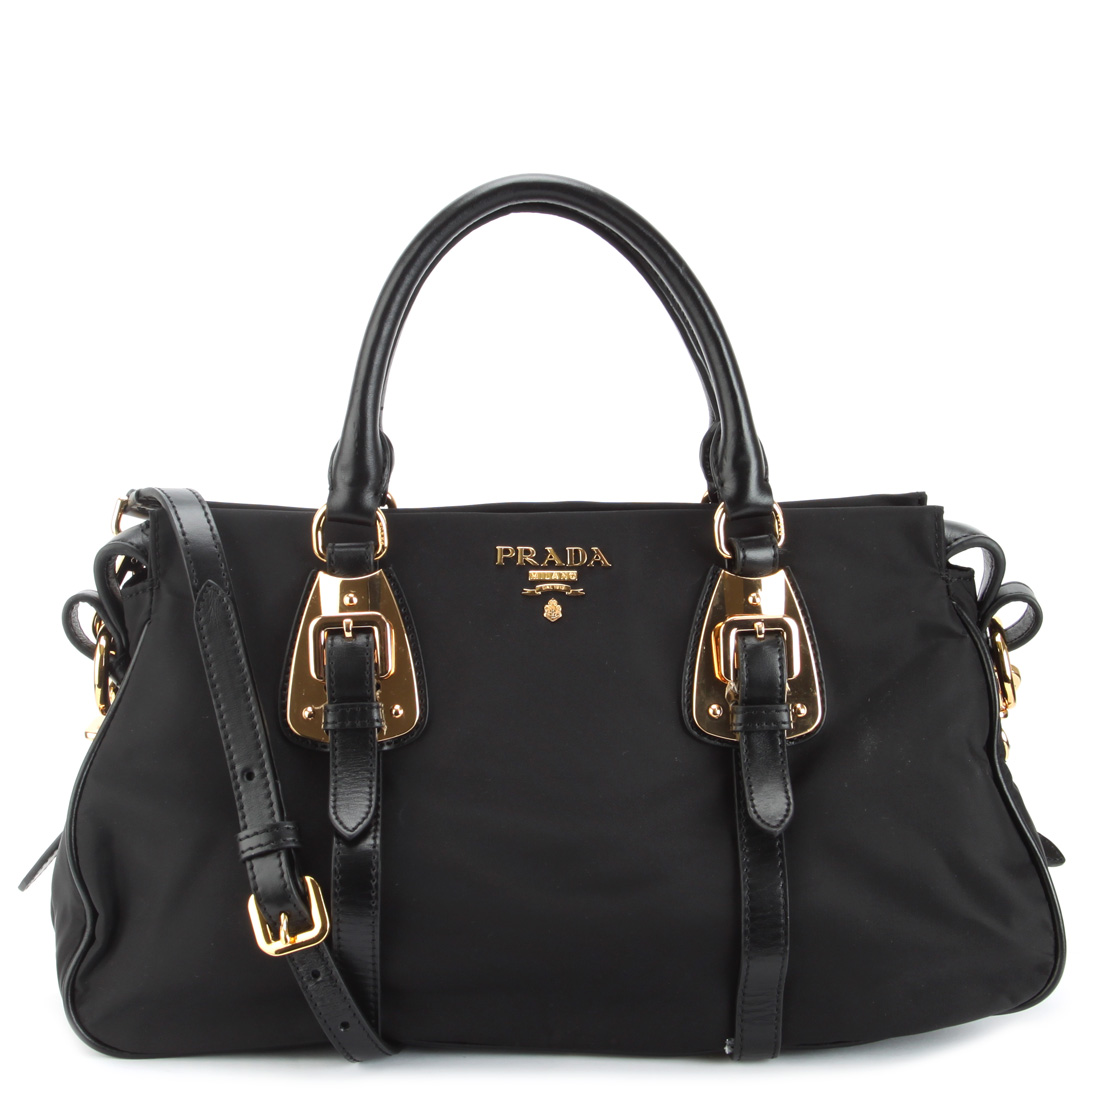 gucci inspired handbags wholesale